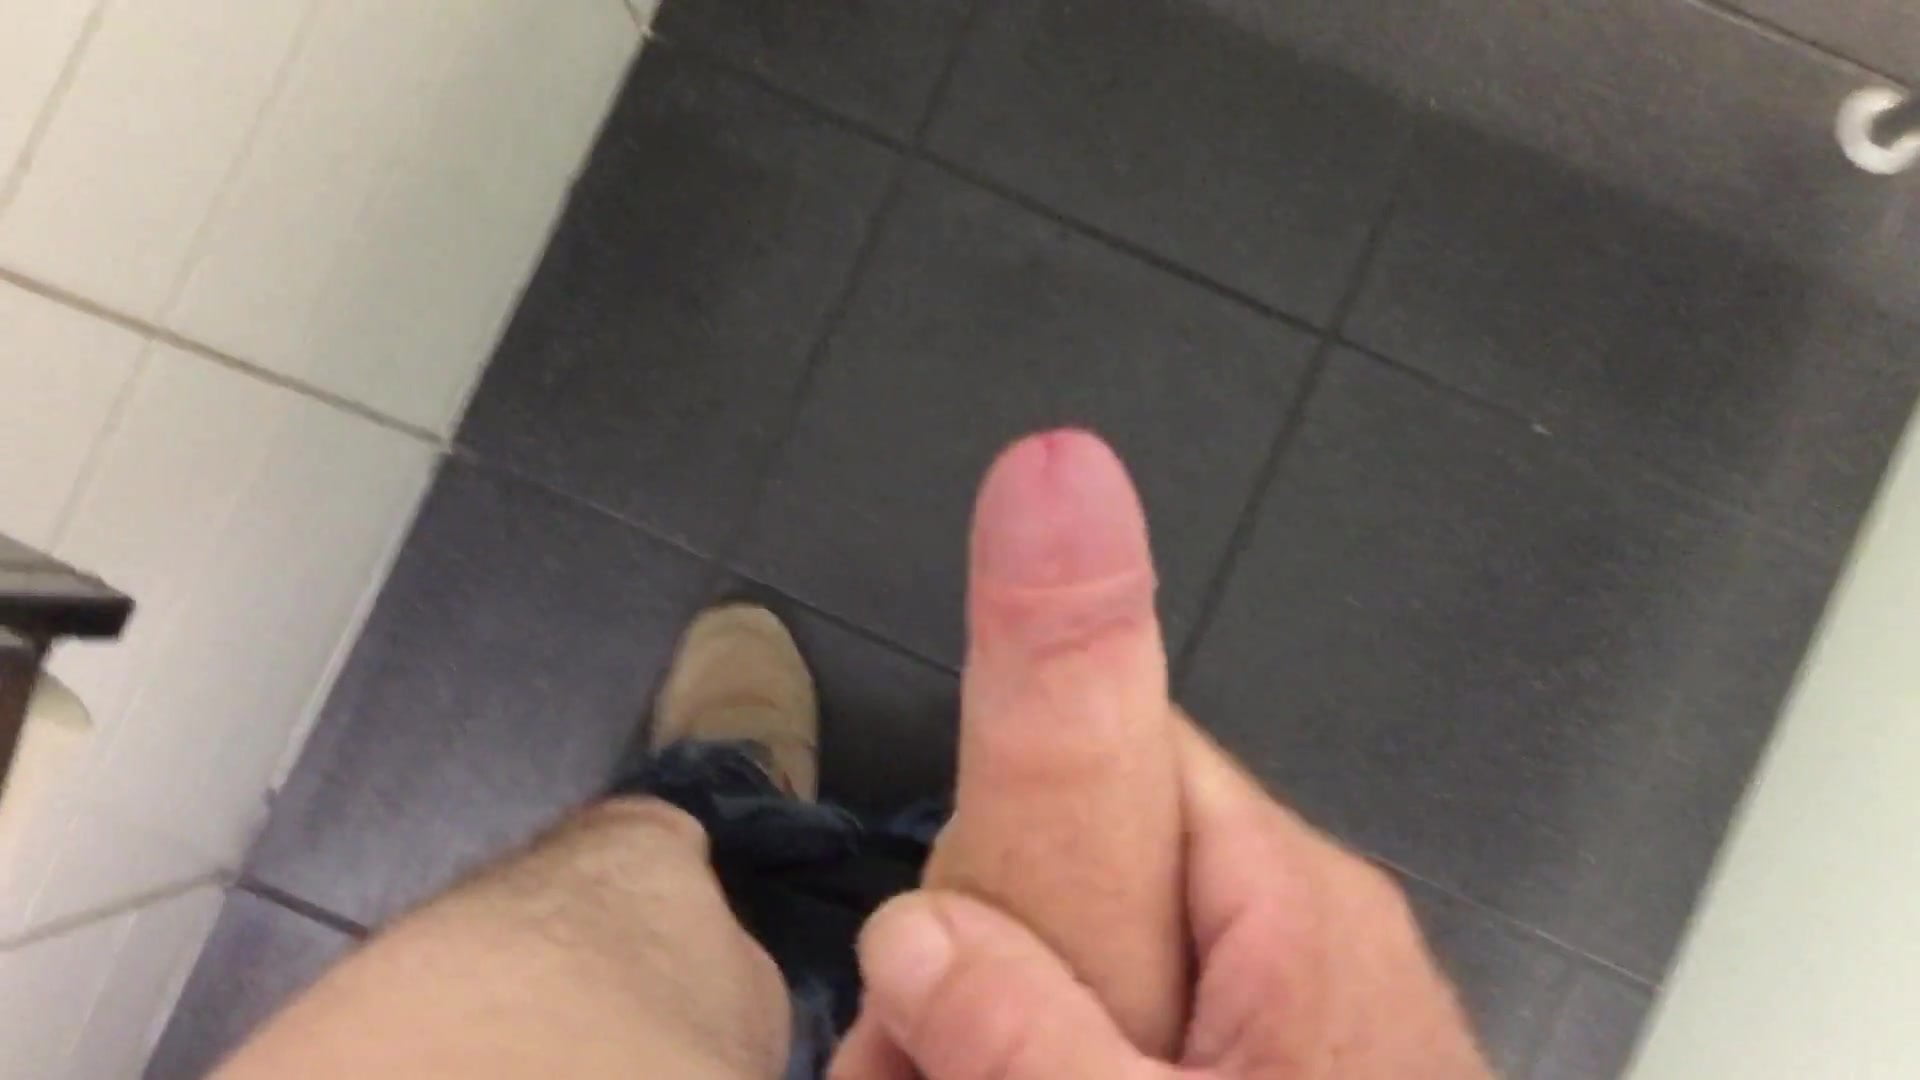 Jerk off and cum in public restroom